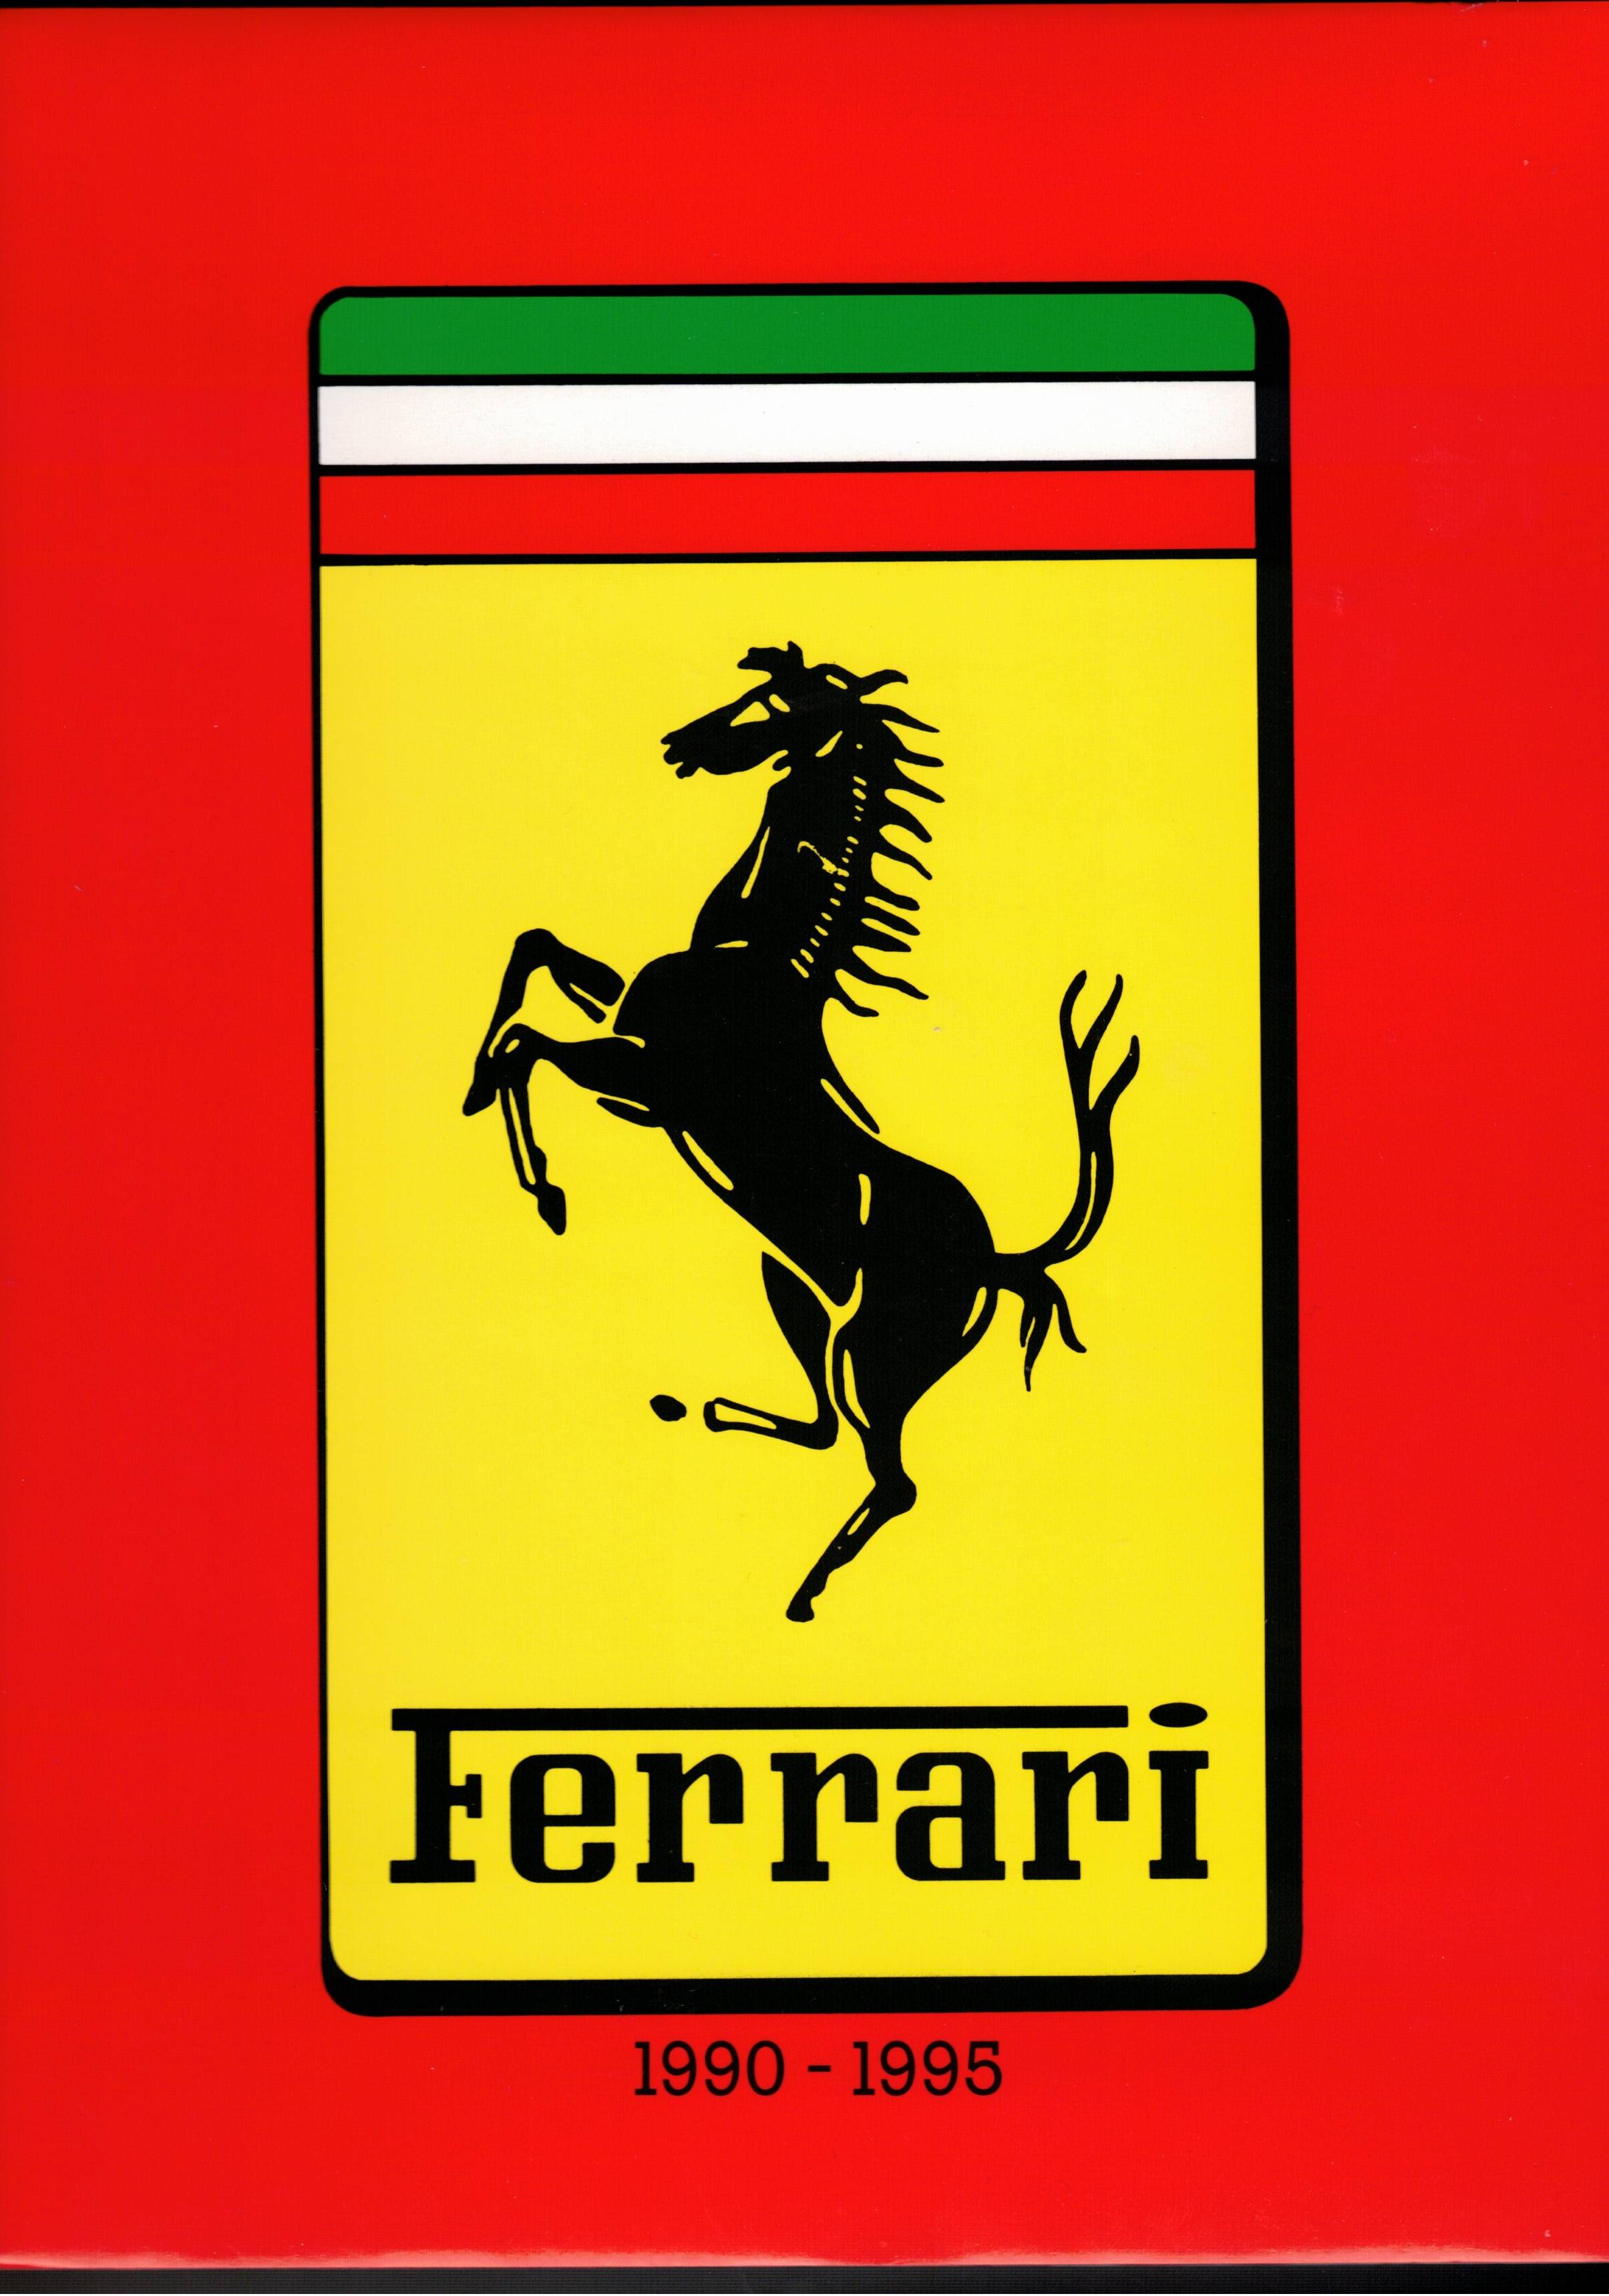 FERRARI 1990 - 1995 AUTOMOBILIA